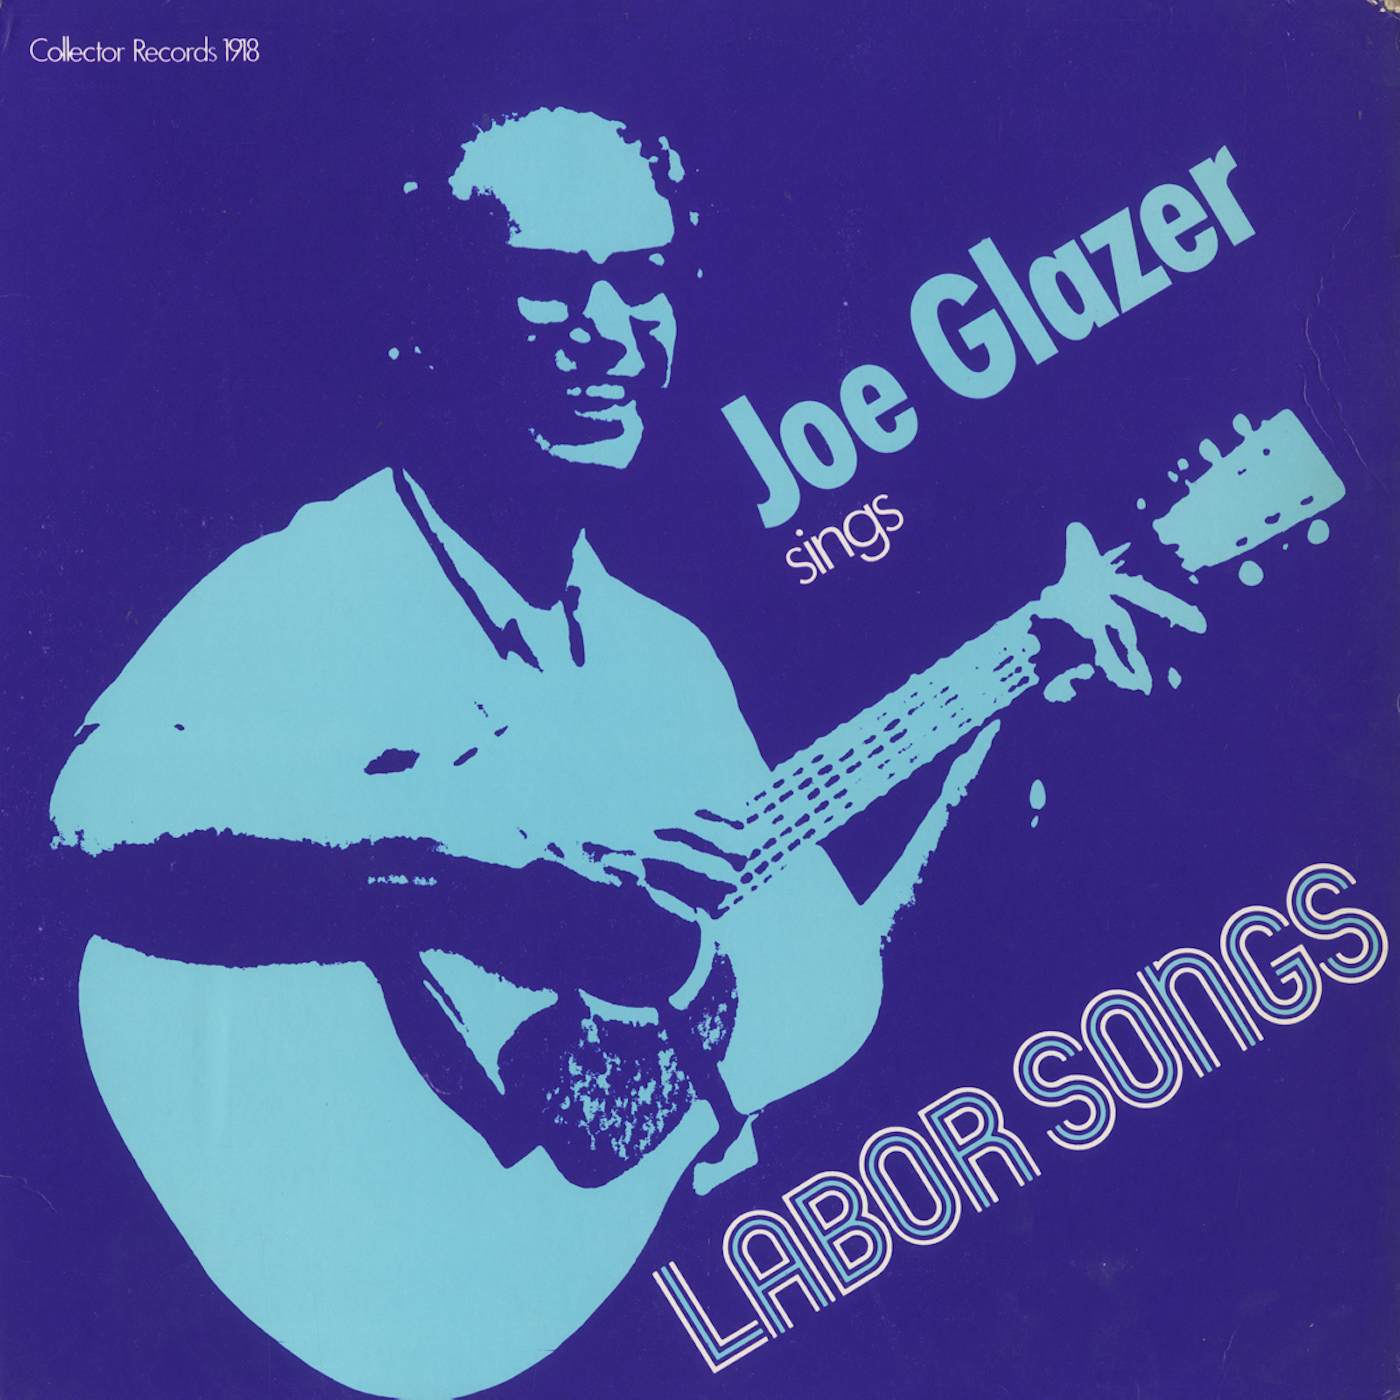 JOE GLAZER SINGS LABOR SONGS CD